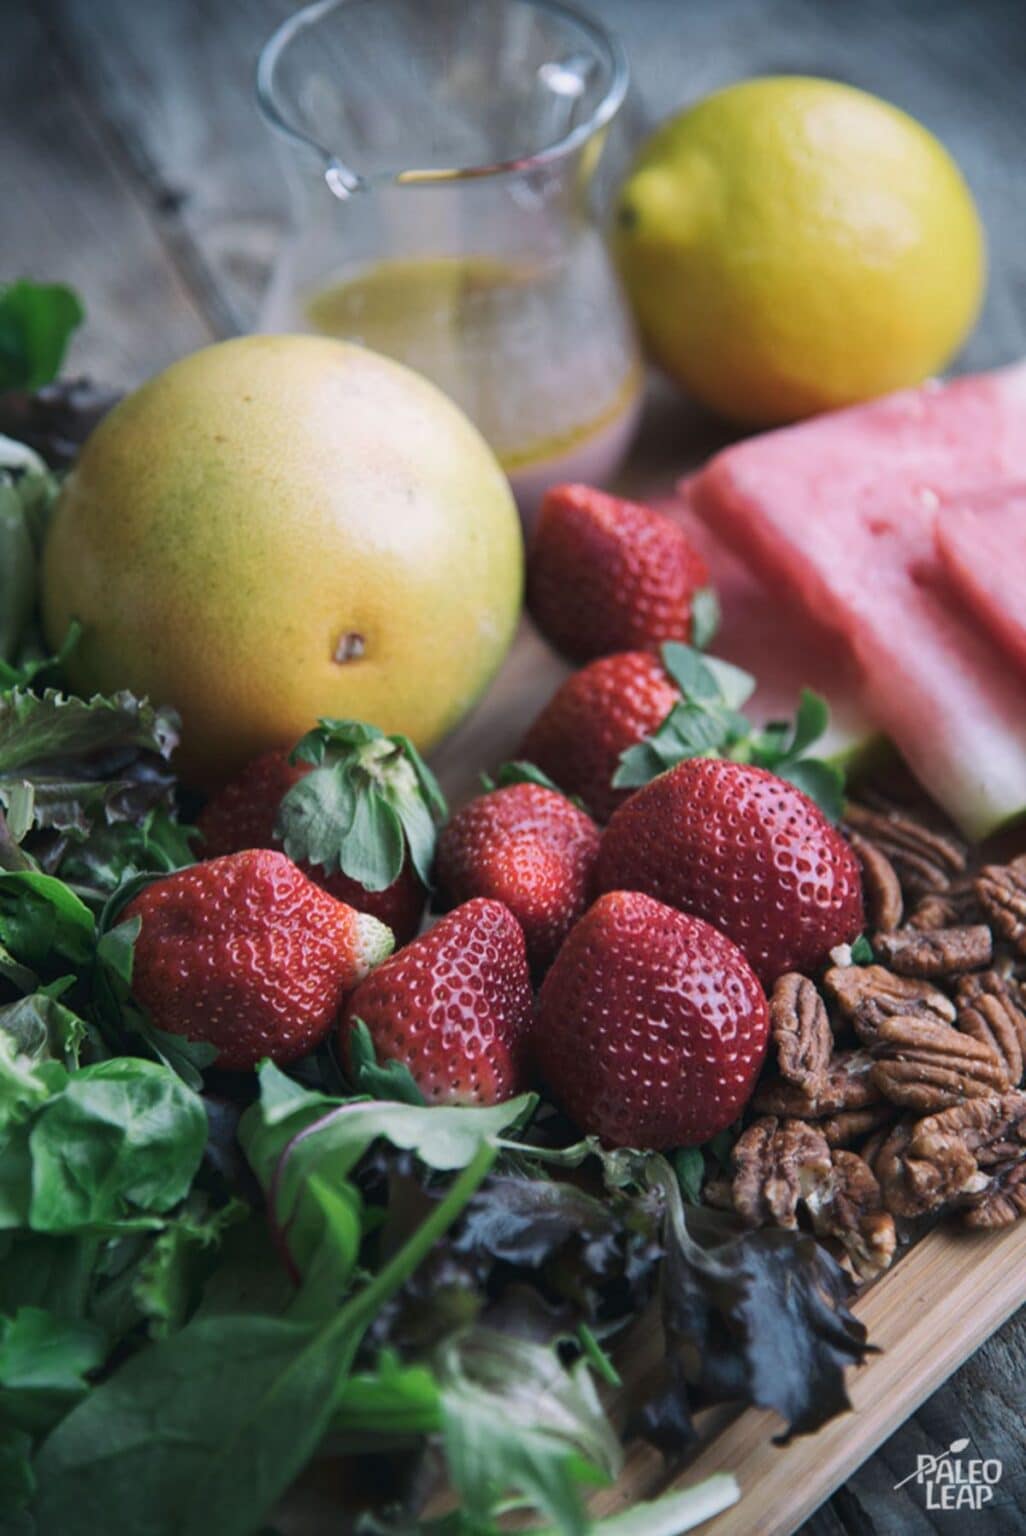 Grapefruit And Watermelon Salad Recipe | Paleo Leap